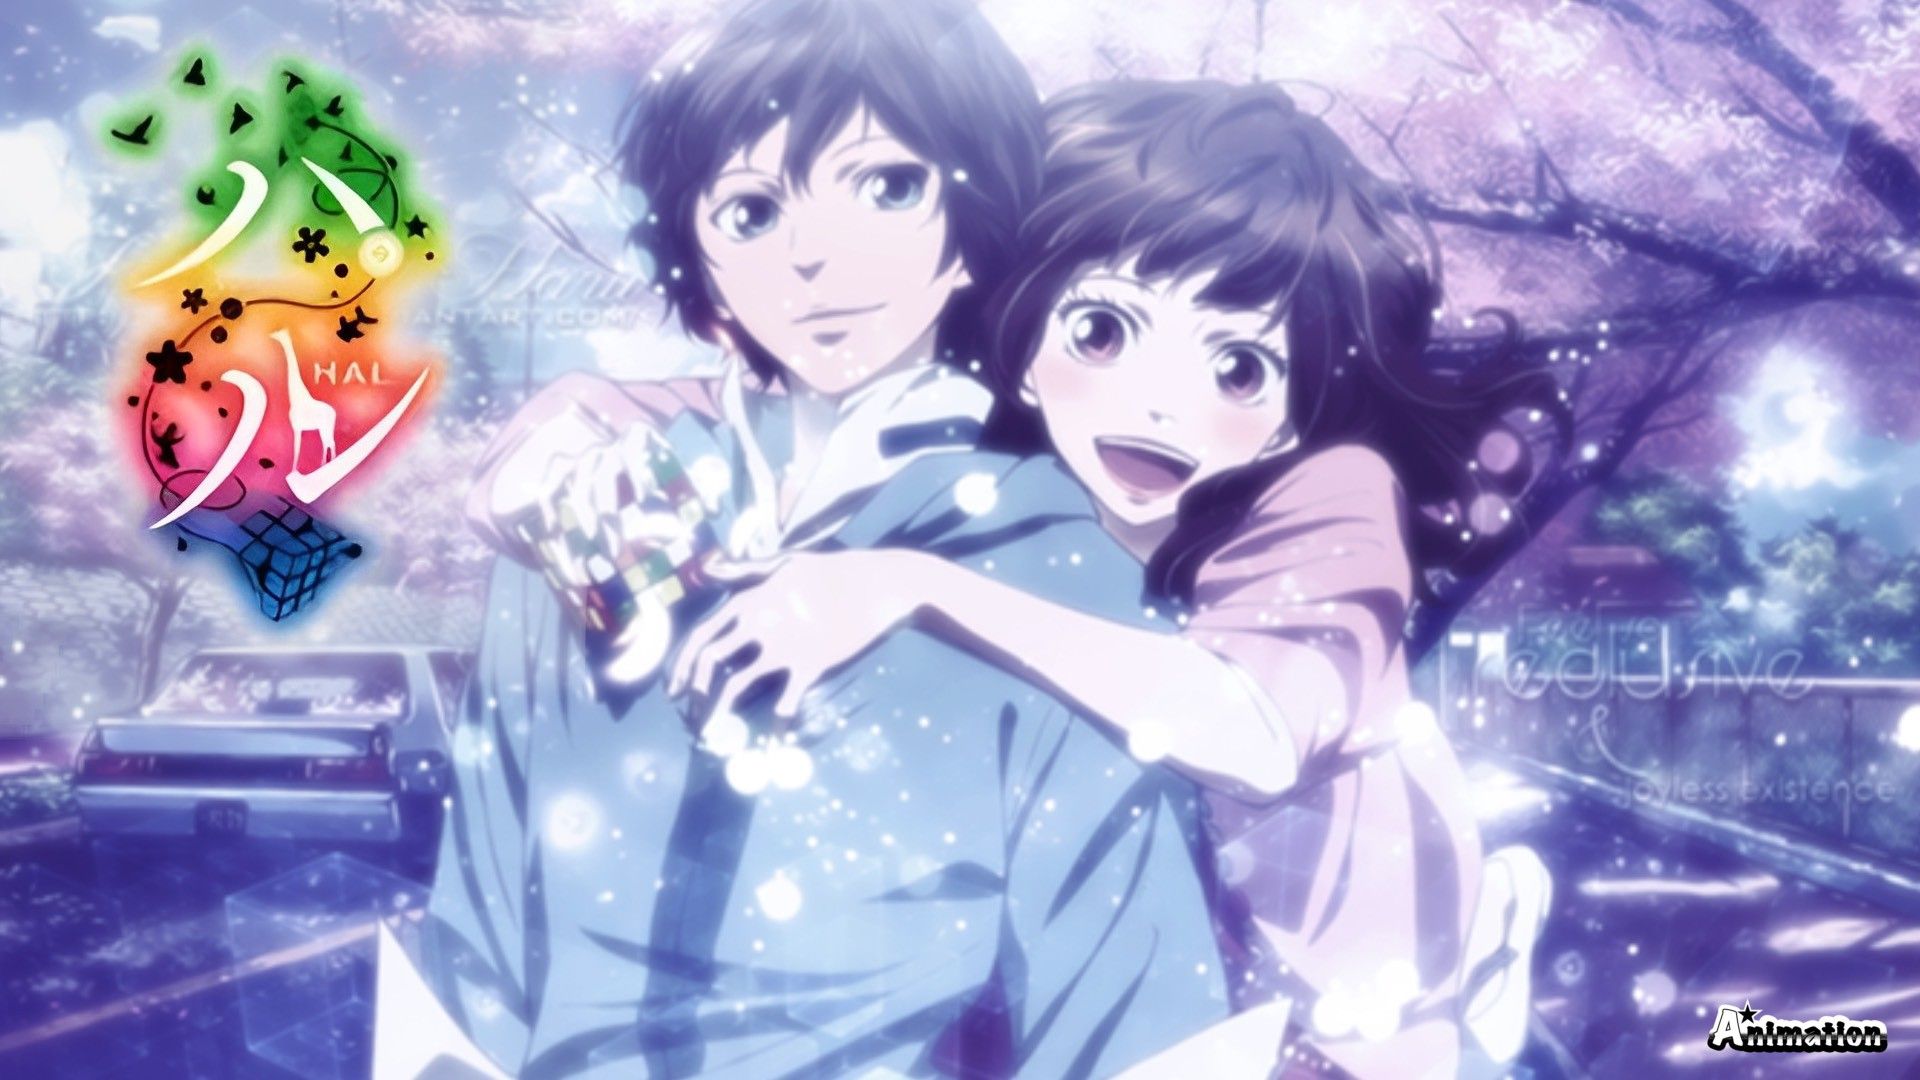 Hal | Anime Movie 2013 - BiliBili